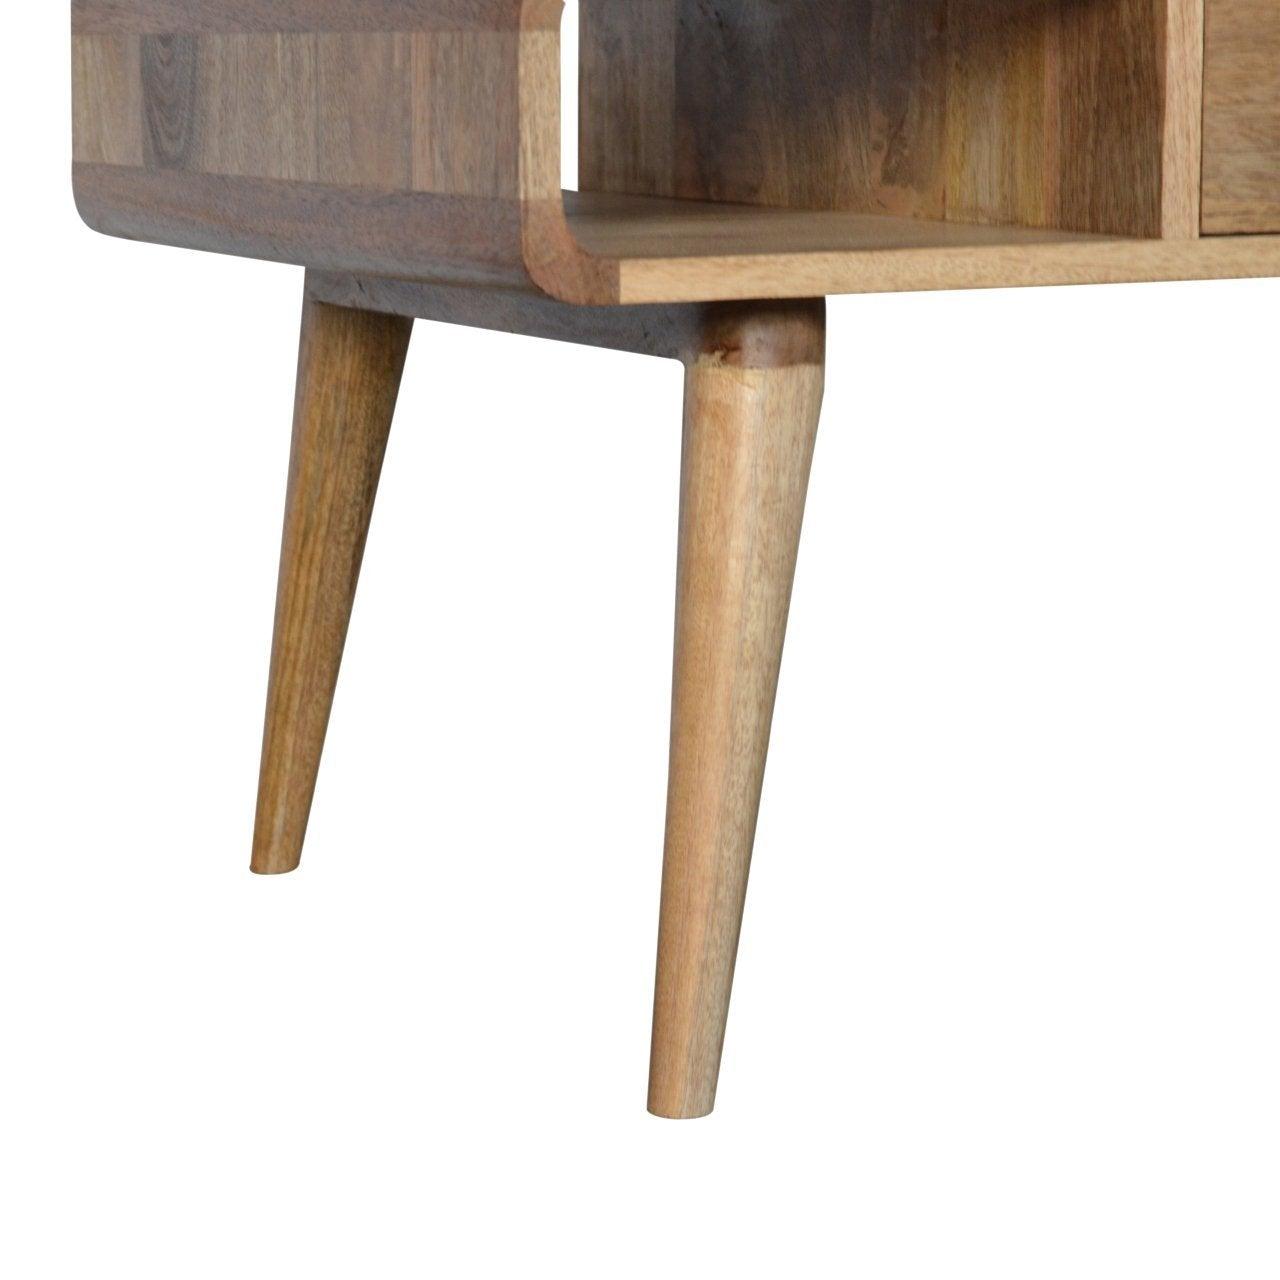 Curved oak-ish coffee table - crimblefest furniture - image 7